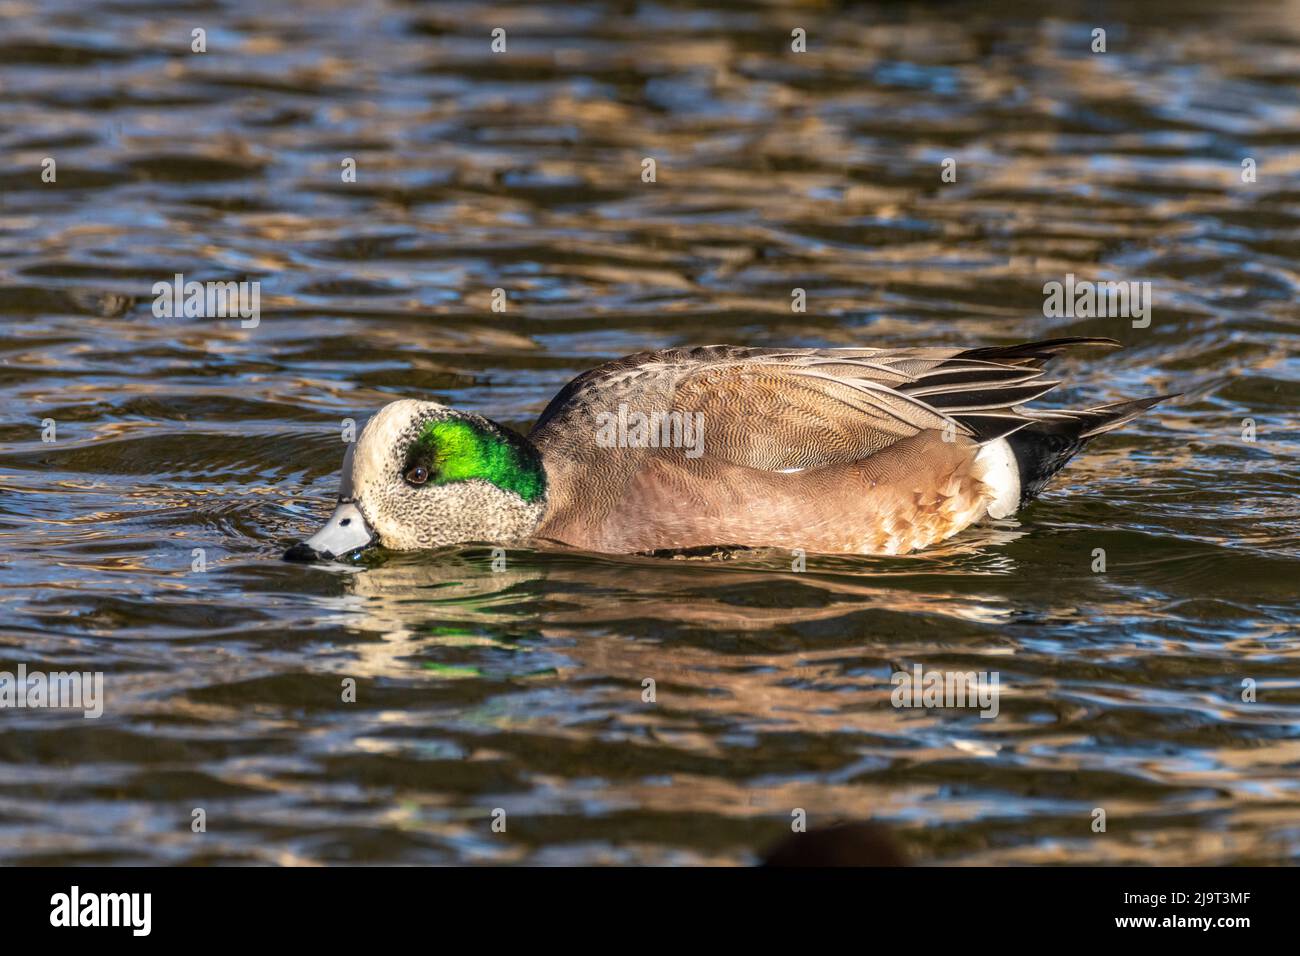 USA, New Mexico, Bernalillo County. Male American wigeon duck in water. Stock Photo